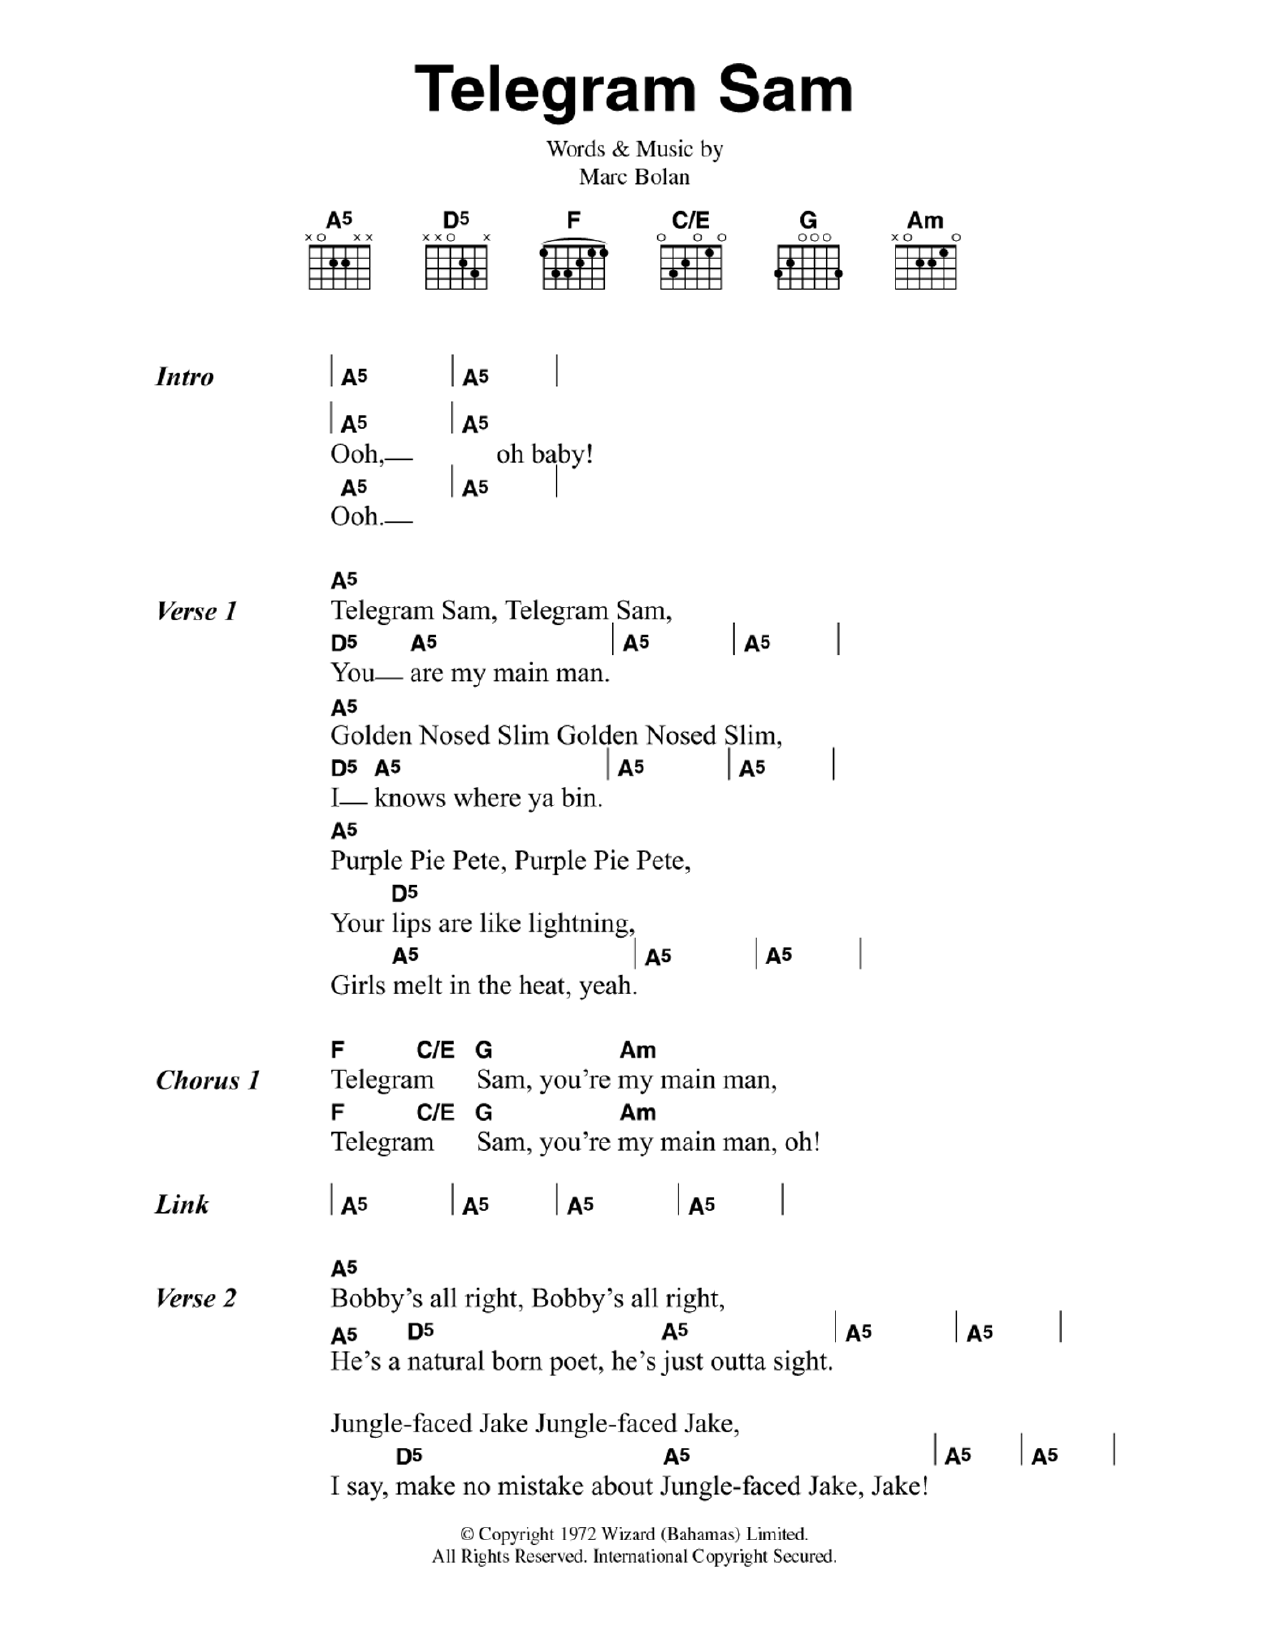 T. Rex Telegram Sam sheet music notes and chords arranged for Guitar Chords/Lyrics